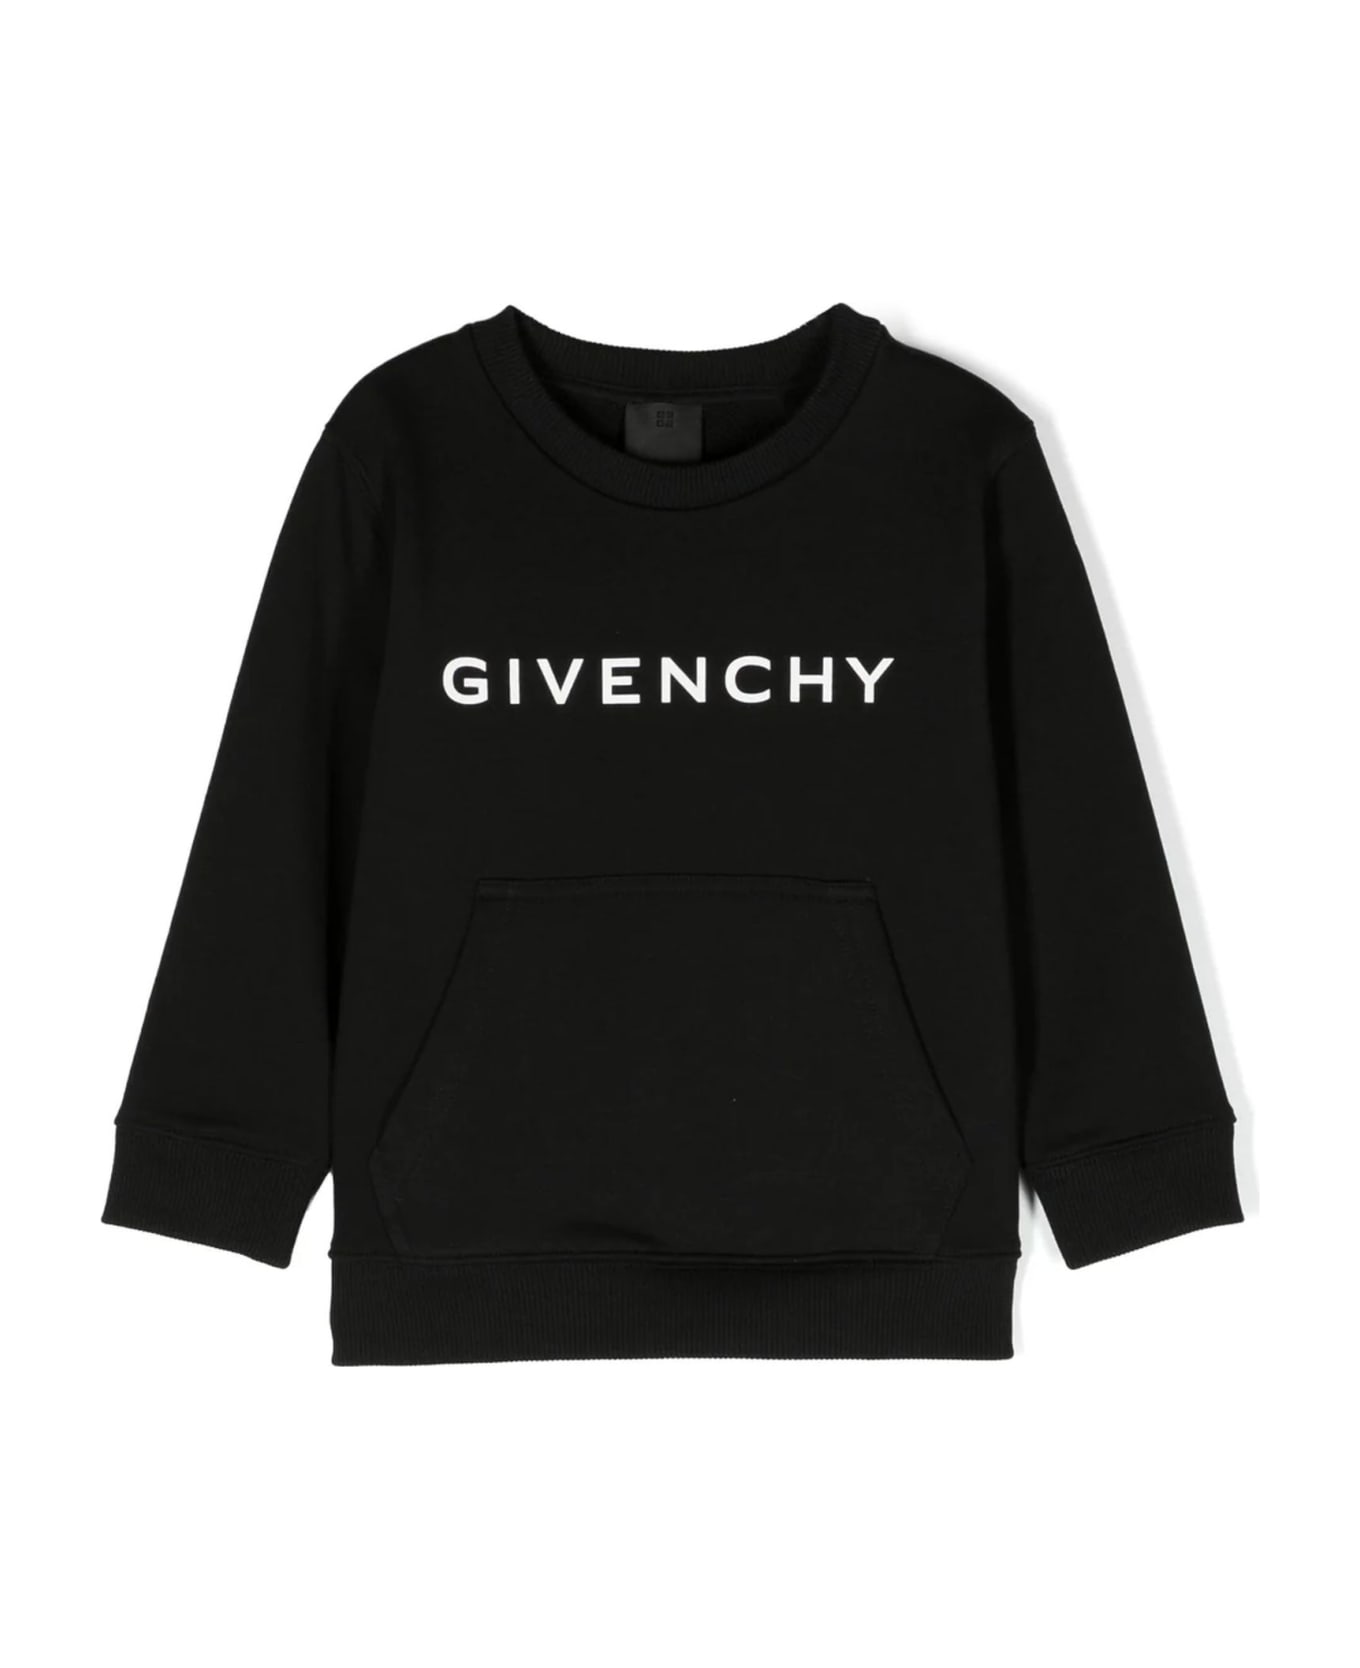 Givenchy Black Cotton Sweatshirt - Nero